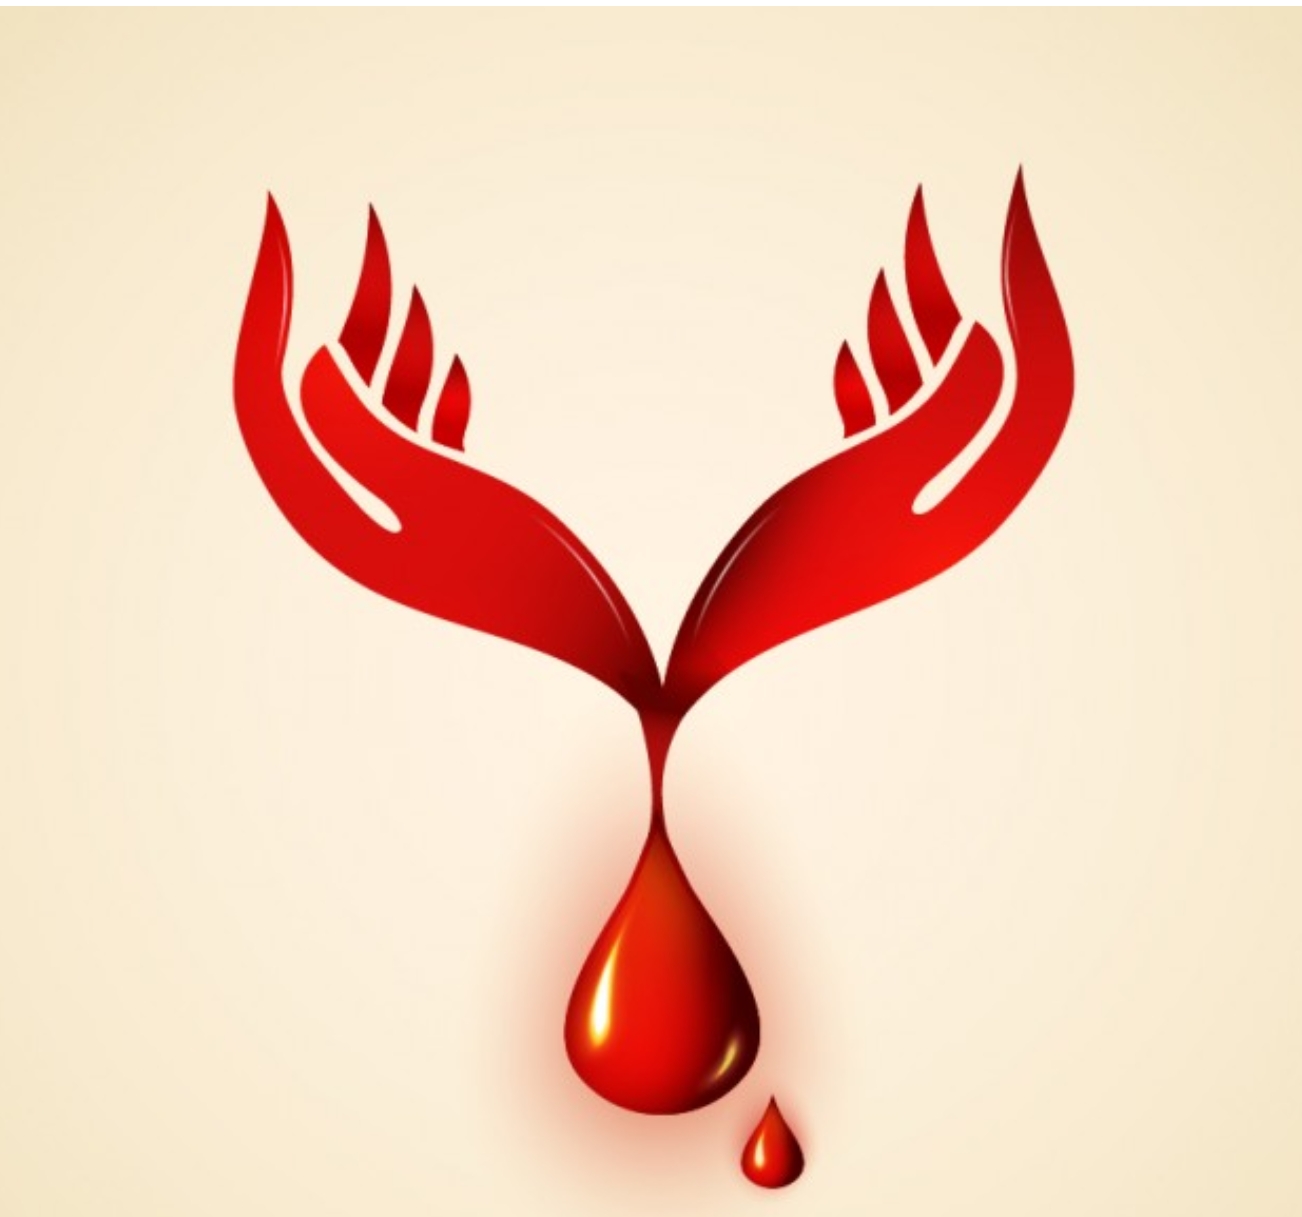 Embliyma donorstva. Капля крови логотип. Символ донорства крови. Донорство крови логотип. Sang com